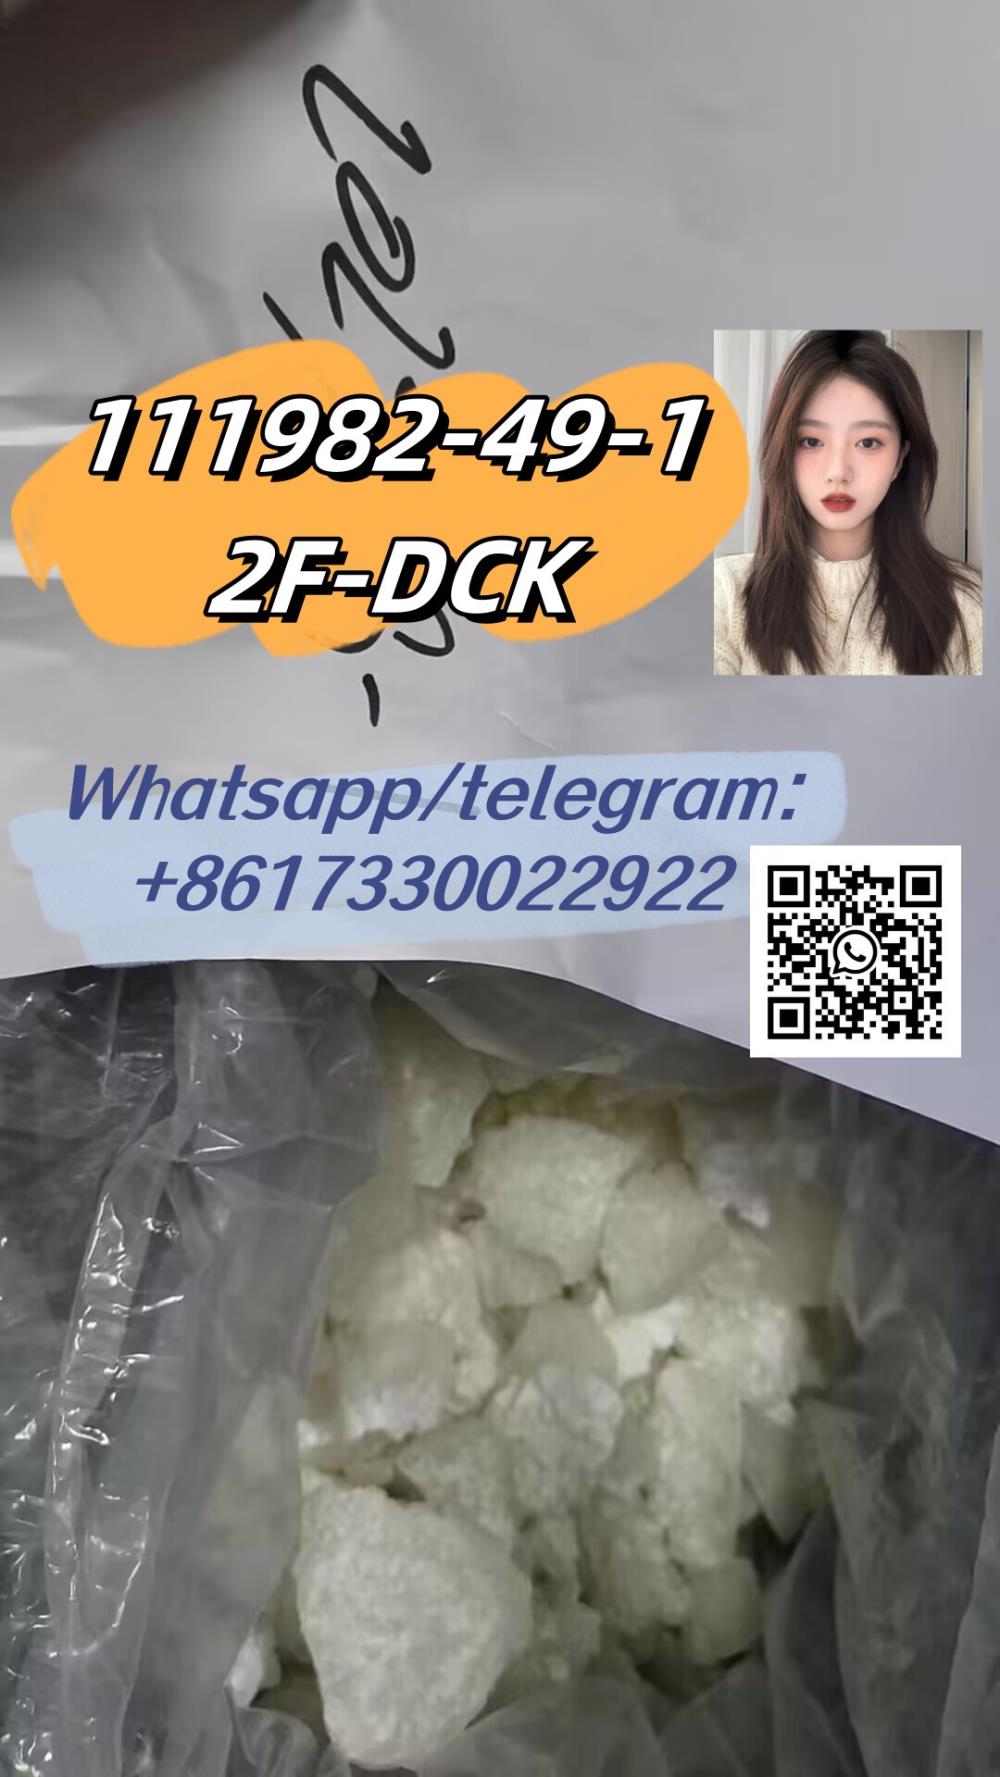  2F-DCK  cas 111982-49-1 Factory wholesale supply, competitive price!